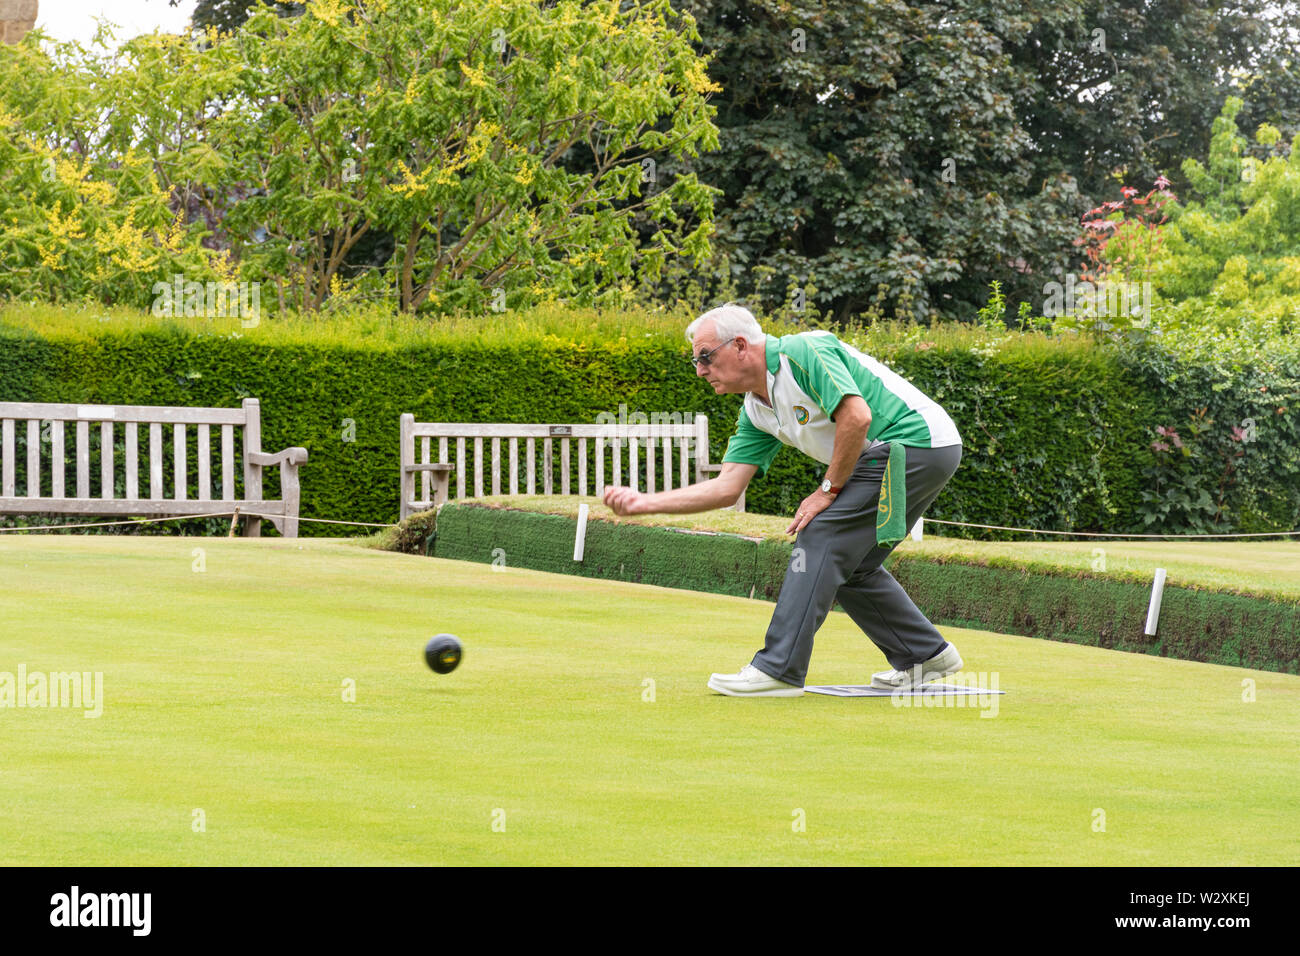 Senior Mann spielt Rasenbowling auf Bowling grün. Ältere Person Bowling, Großbritannien Stockfoto